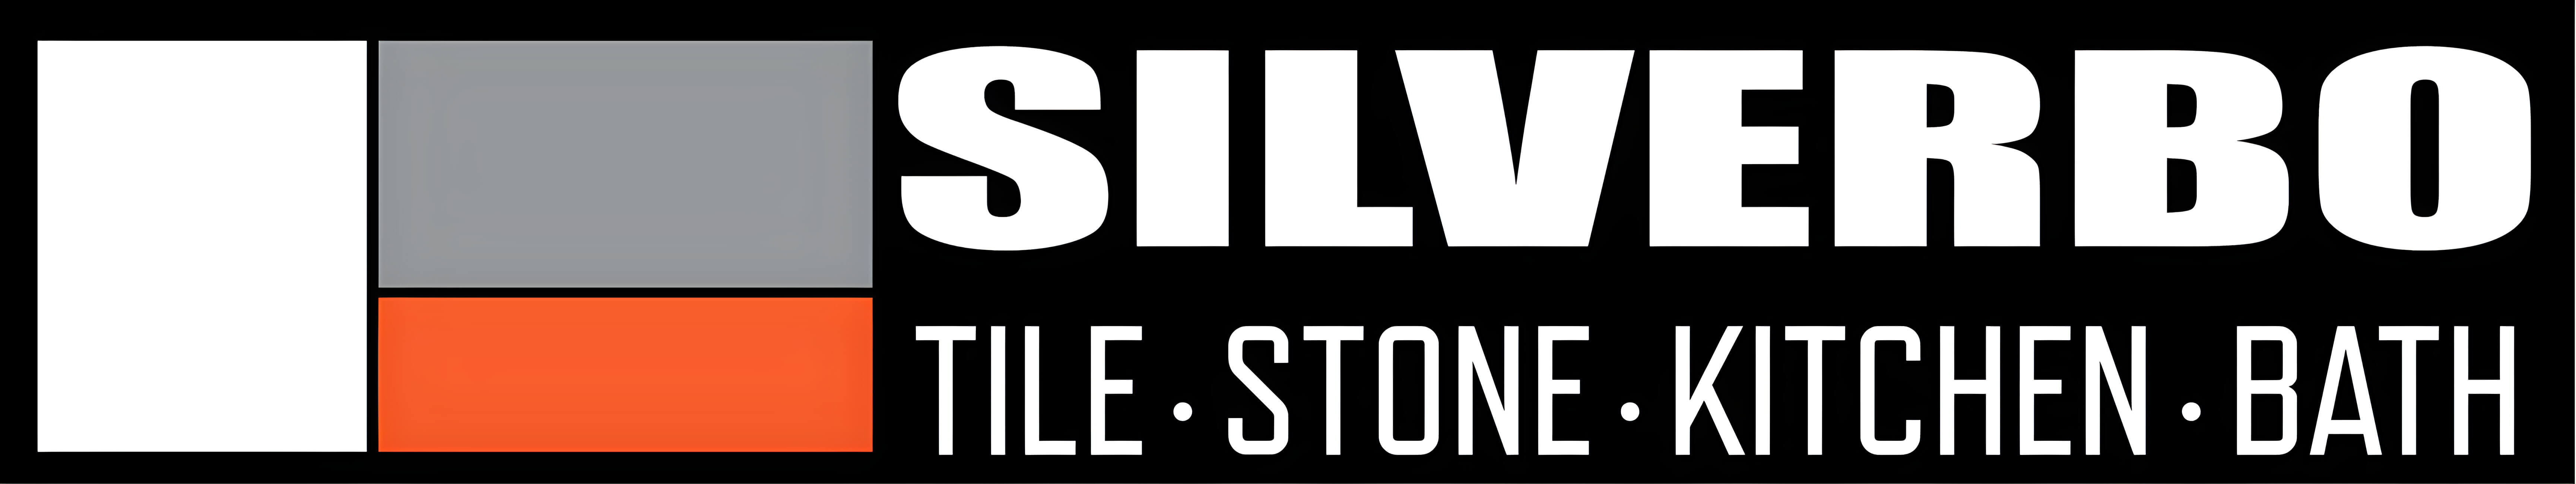 Silvebo Stone